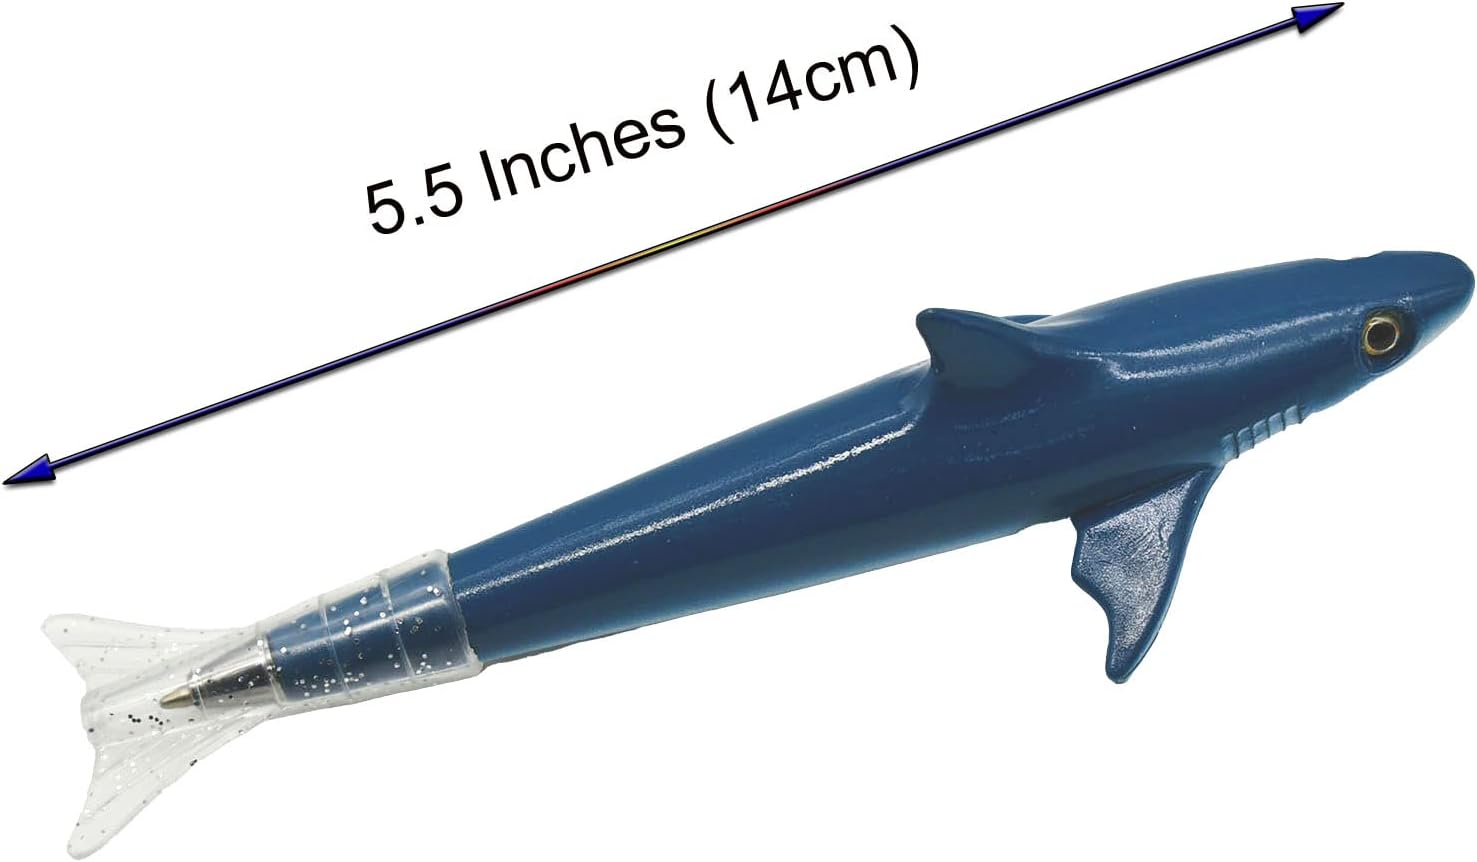 5PCS Clownfish Shark Sea Horse Dolphin Pens Sea Animal Ballpoint Pens